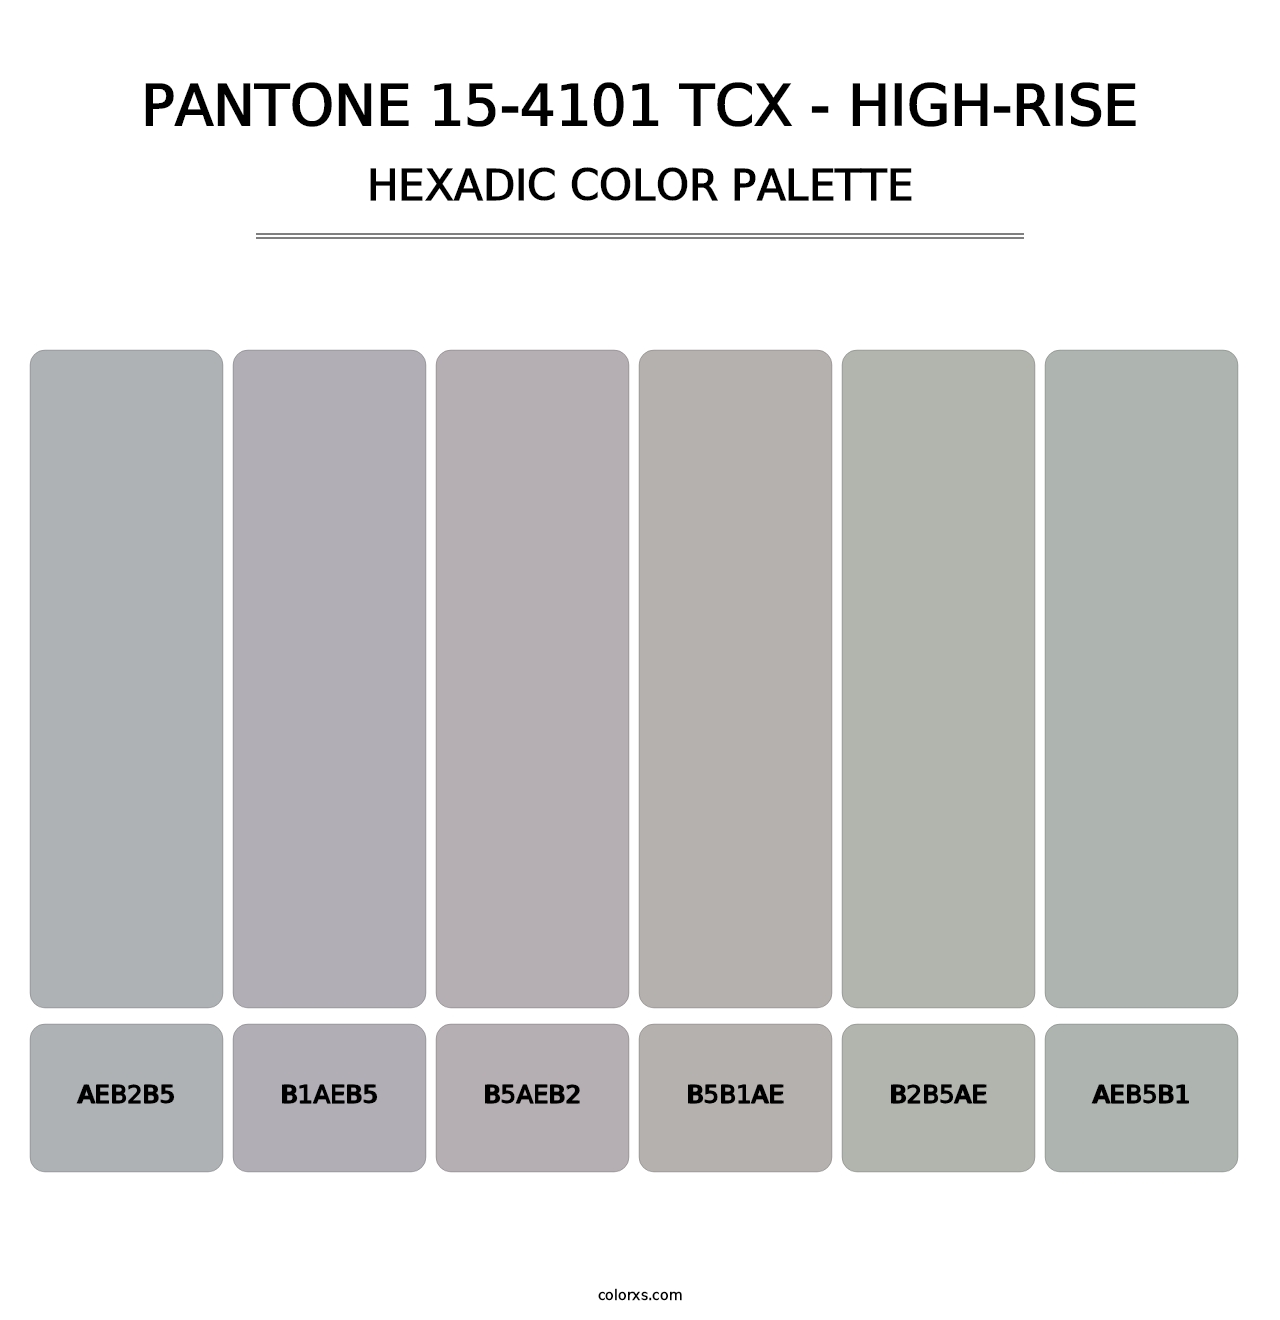 PANTONE 15-4101 TCX - High-rise - Hexadic Color Palette